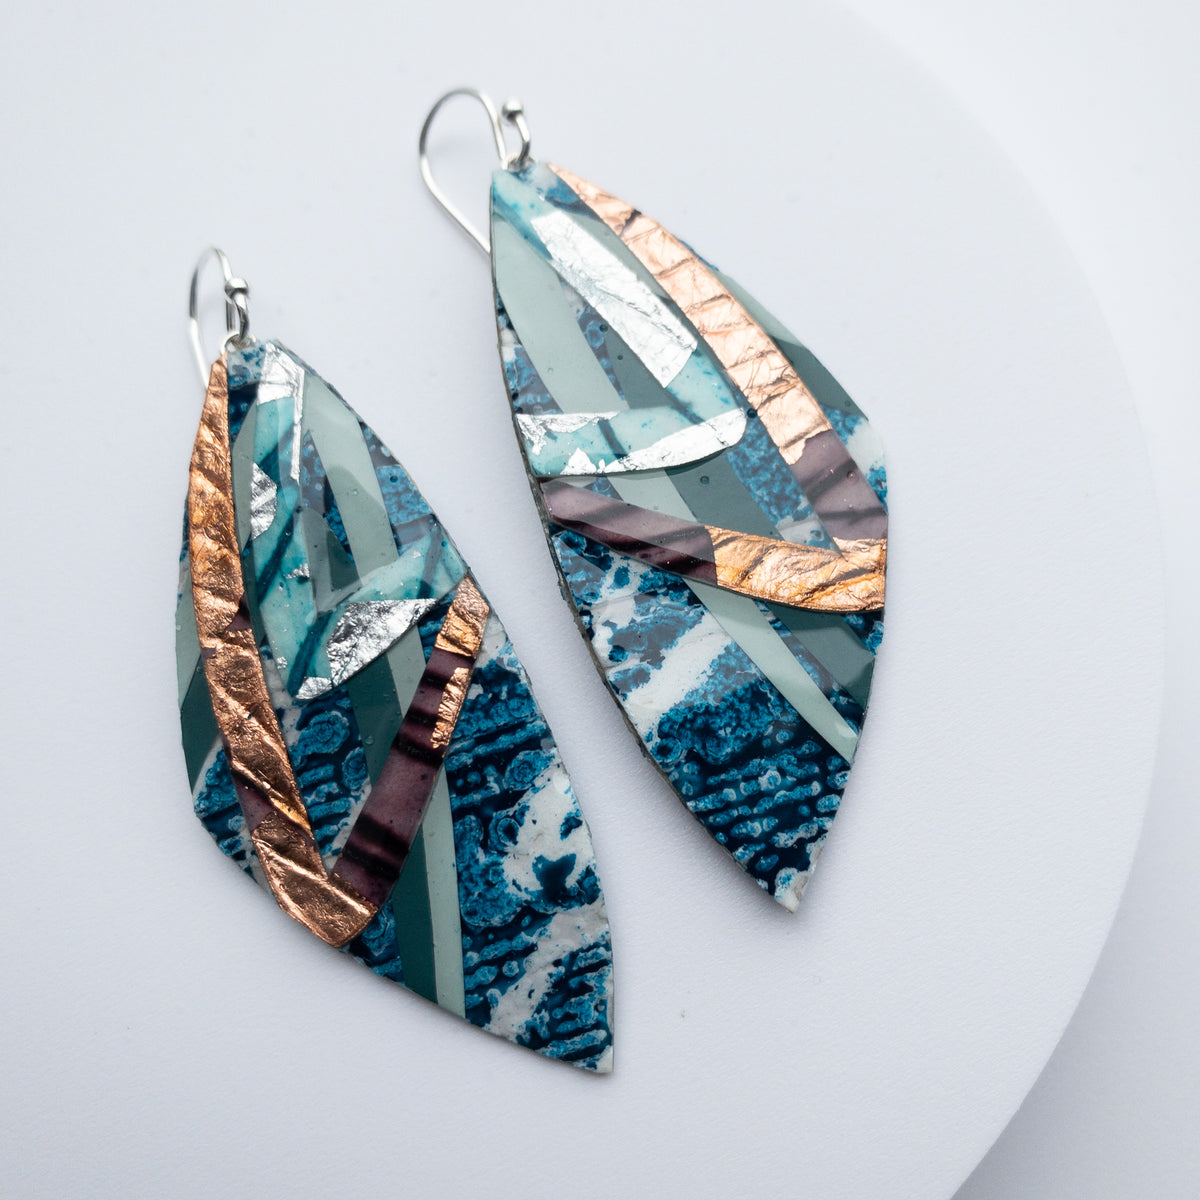 Leamhan batik textile earrings in teal/aqua/silver/rose-gold/aubergine